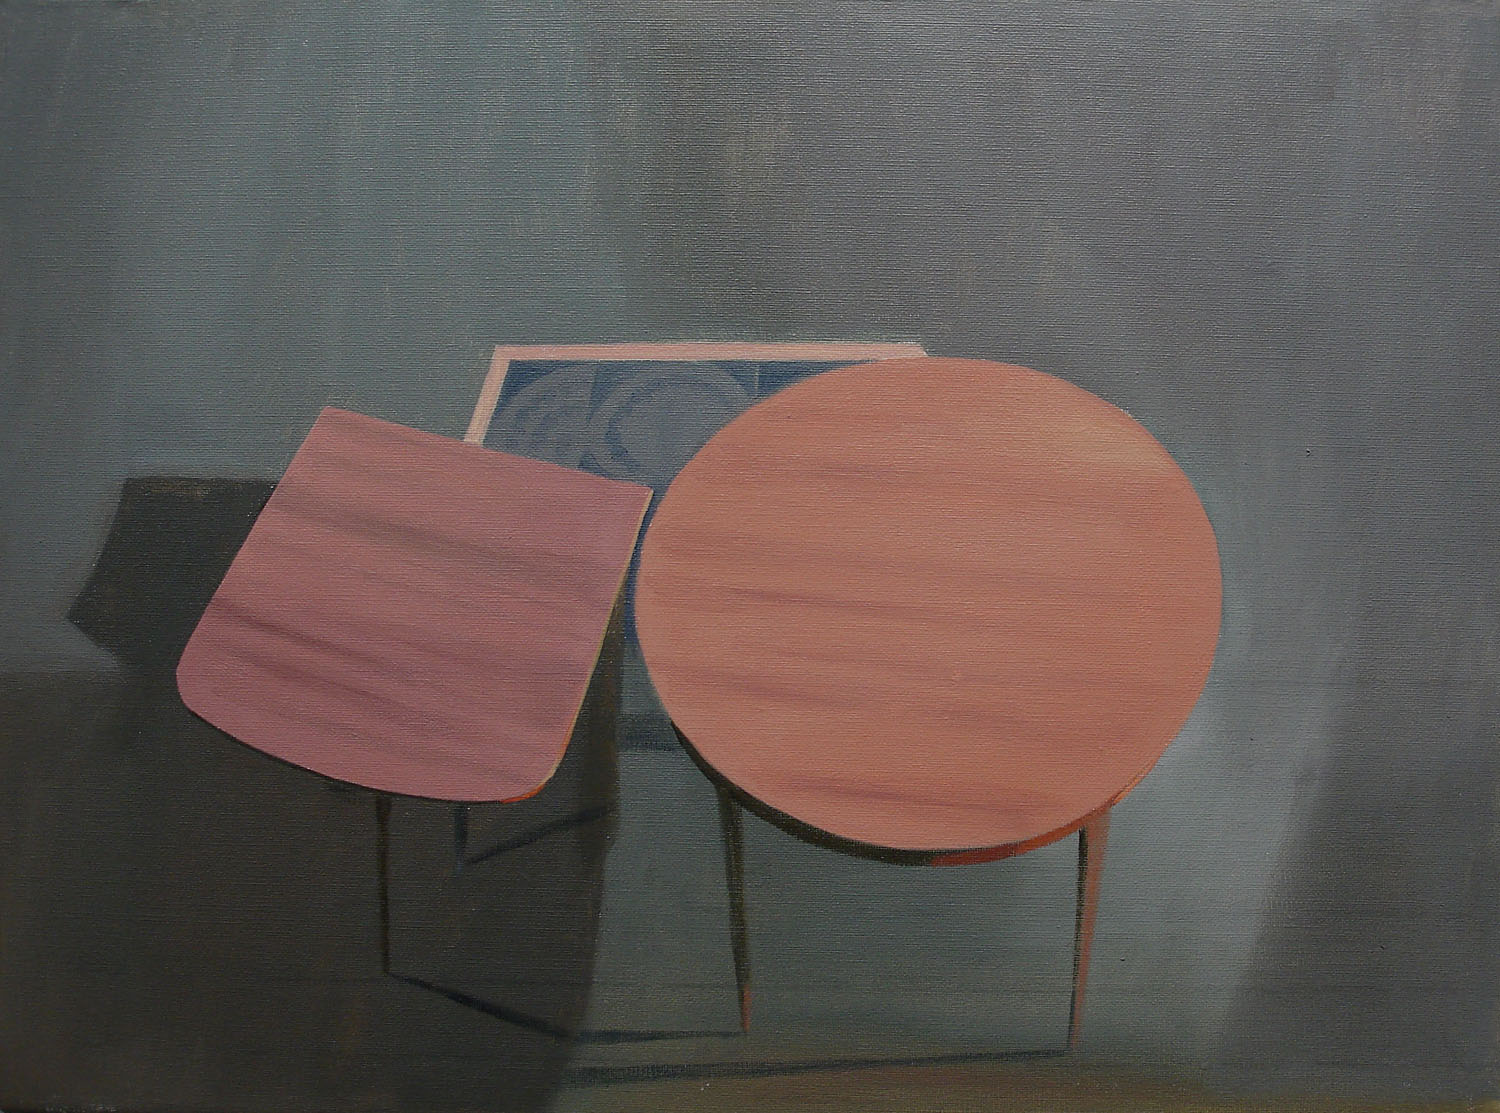   Tables    2009, oil on canvas, 30 x 40cm  